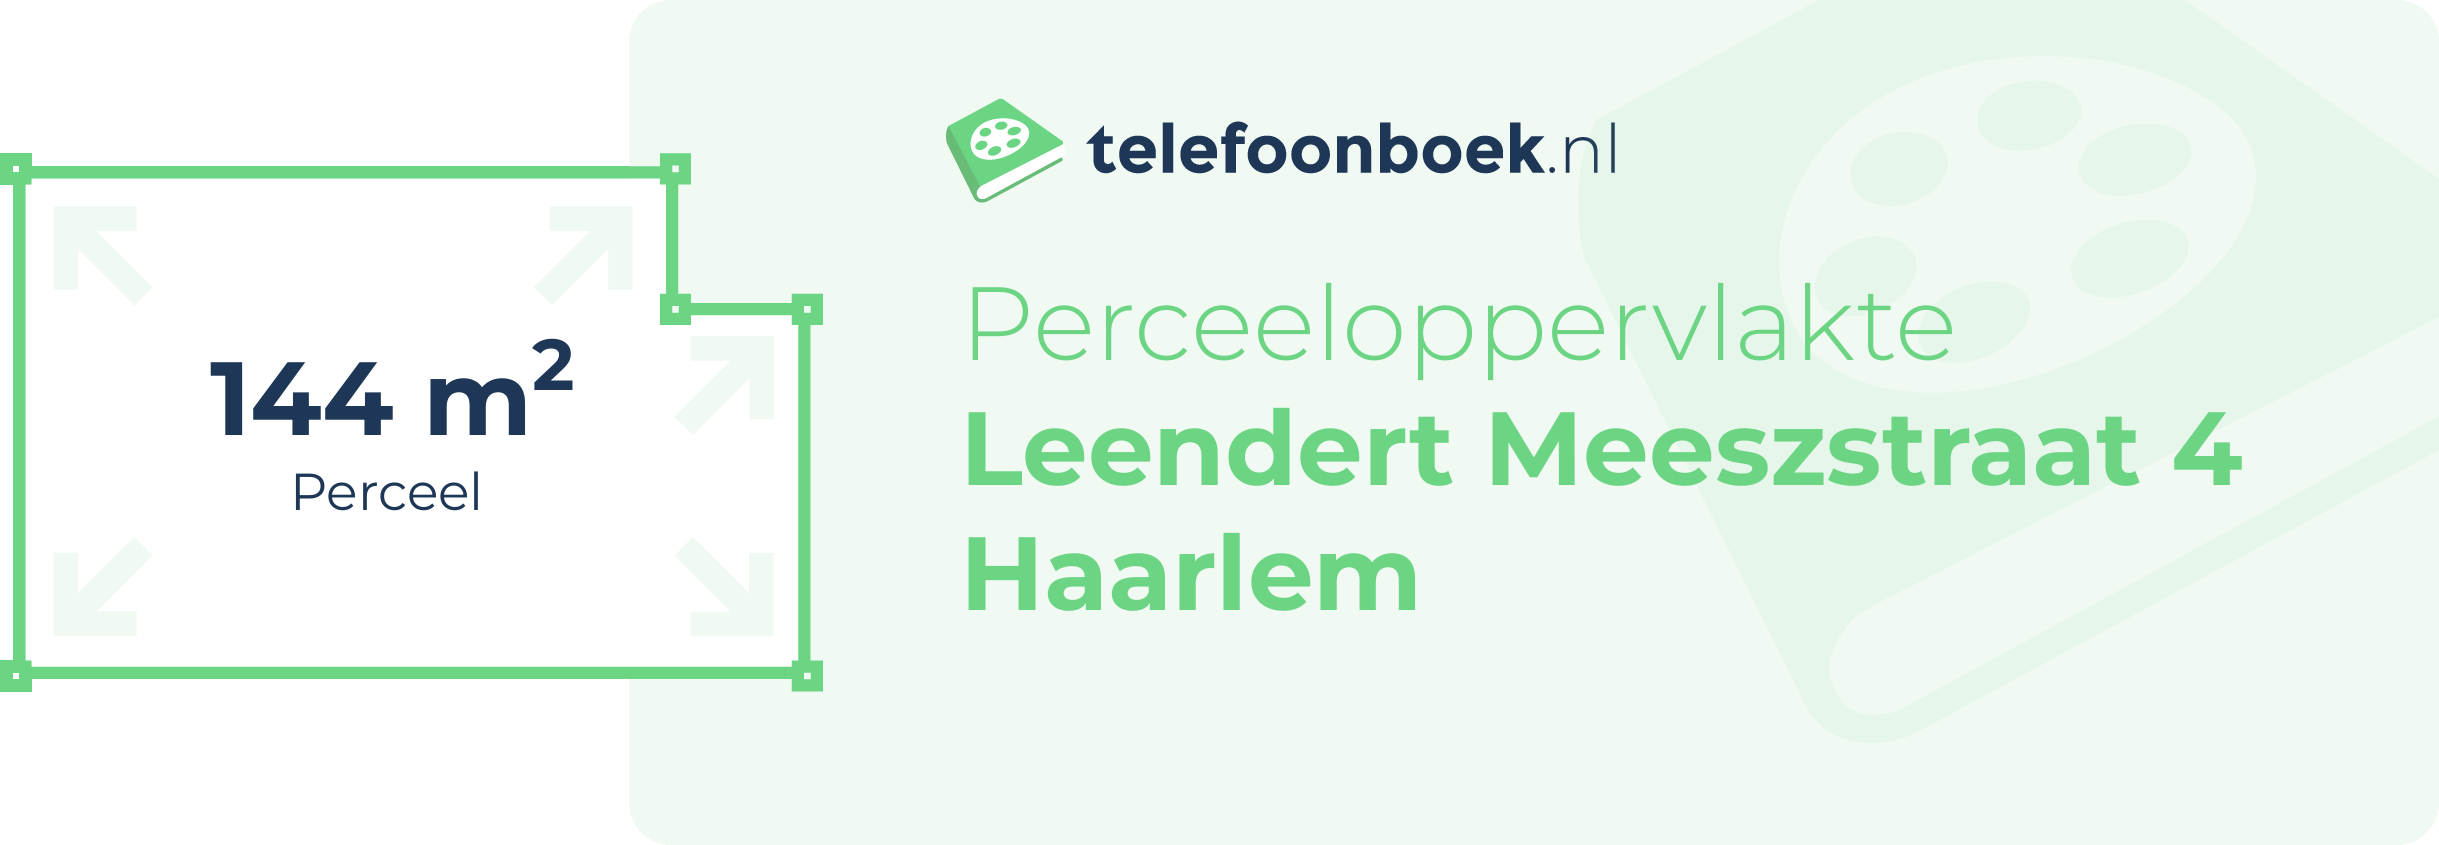 Perceeloppervlakte Leendert Meeszstraat 4 Haarlem